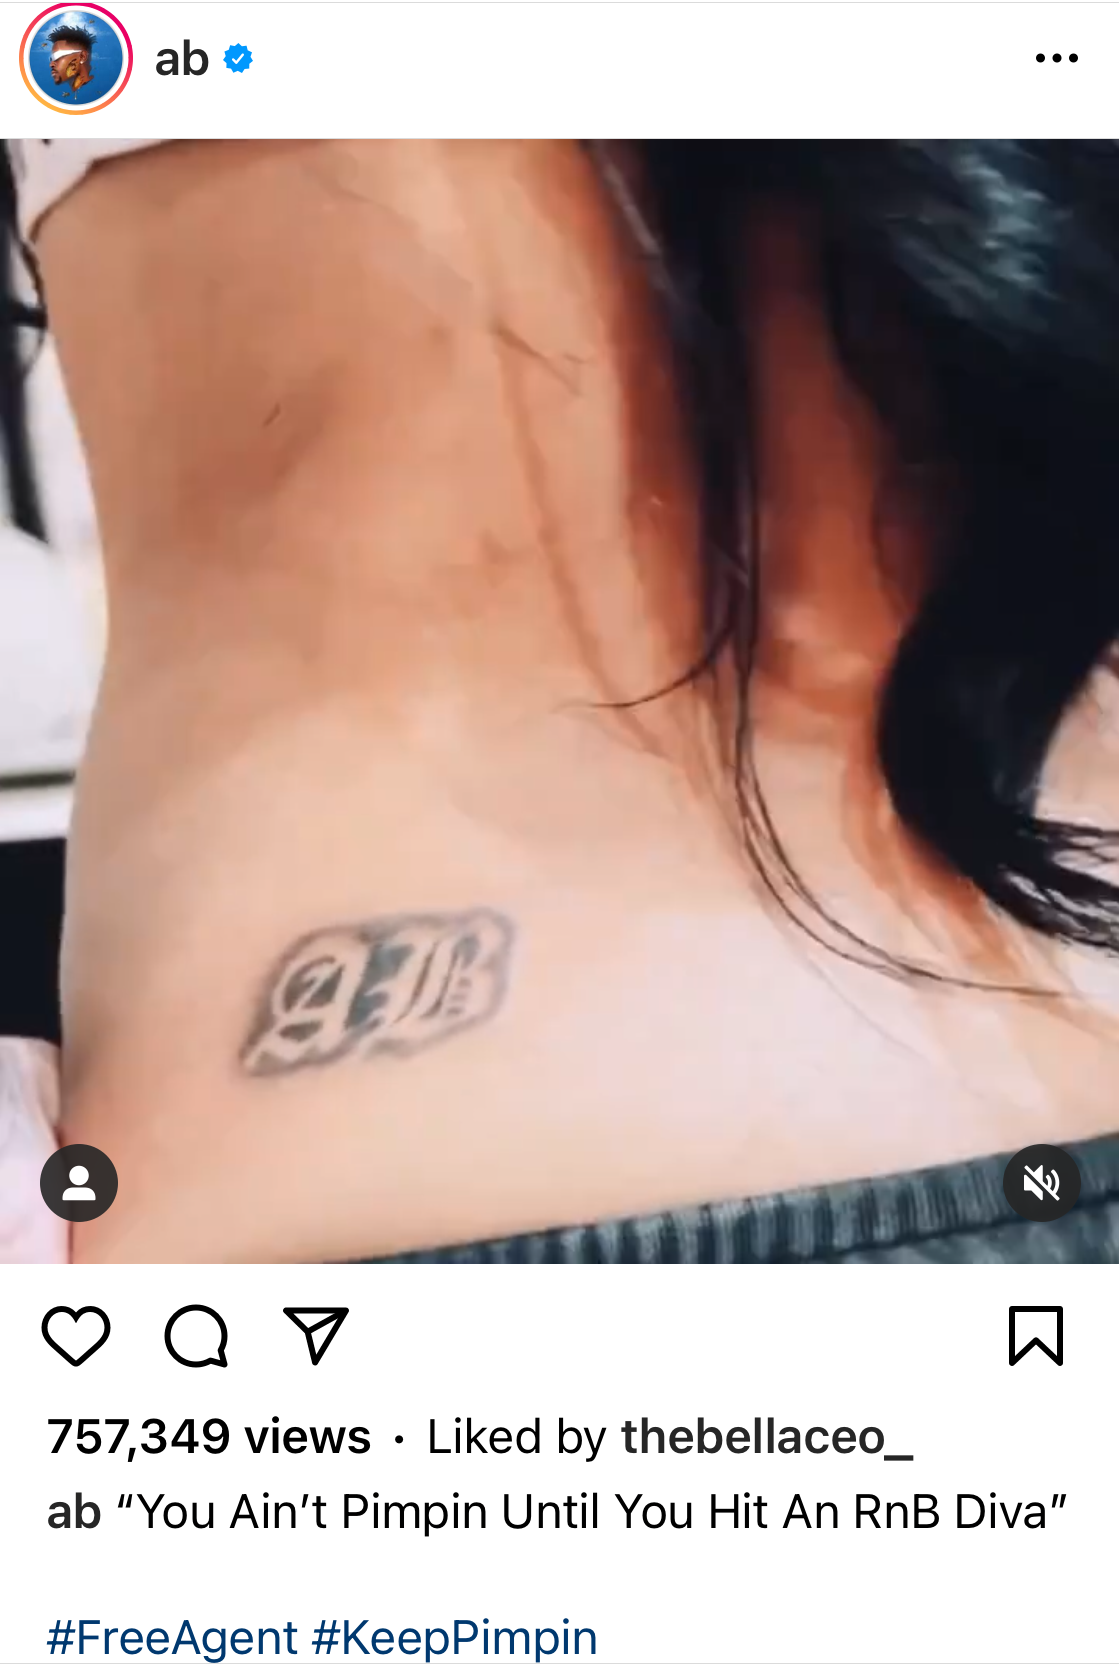 Keyshia Cole and Antonio Browns tattoo drama on Instagram explained